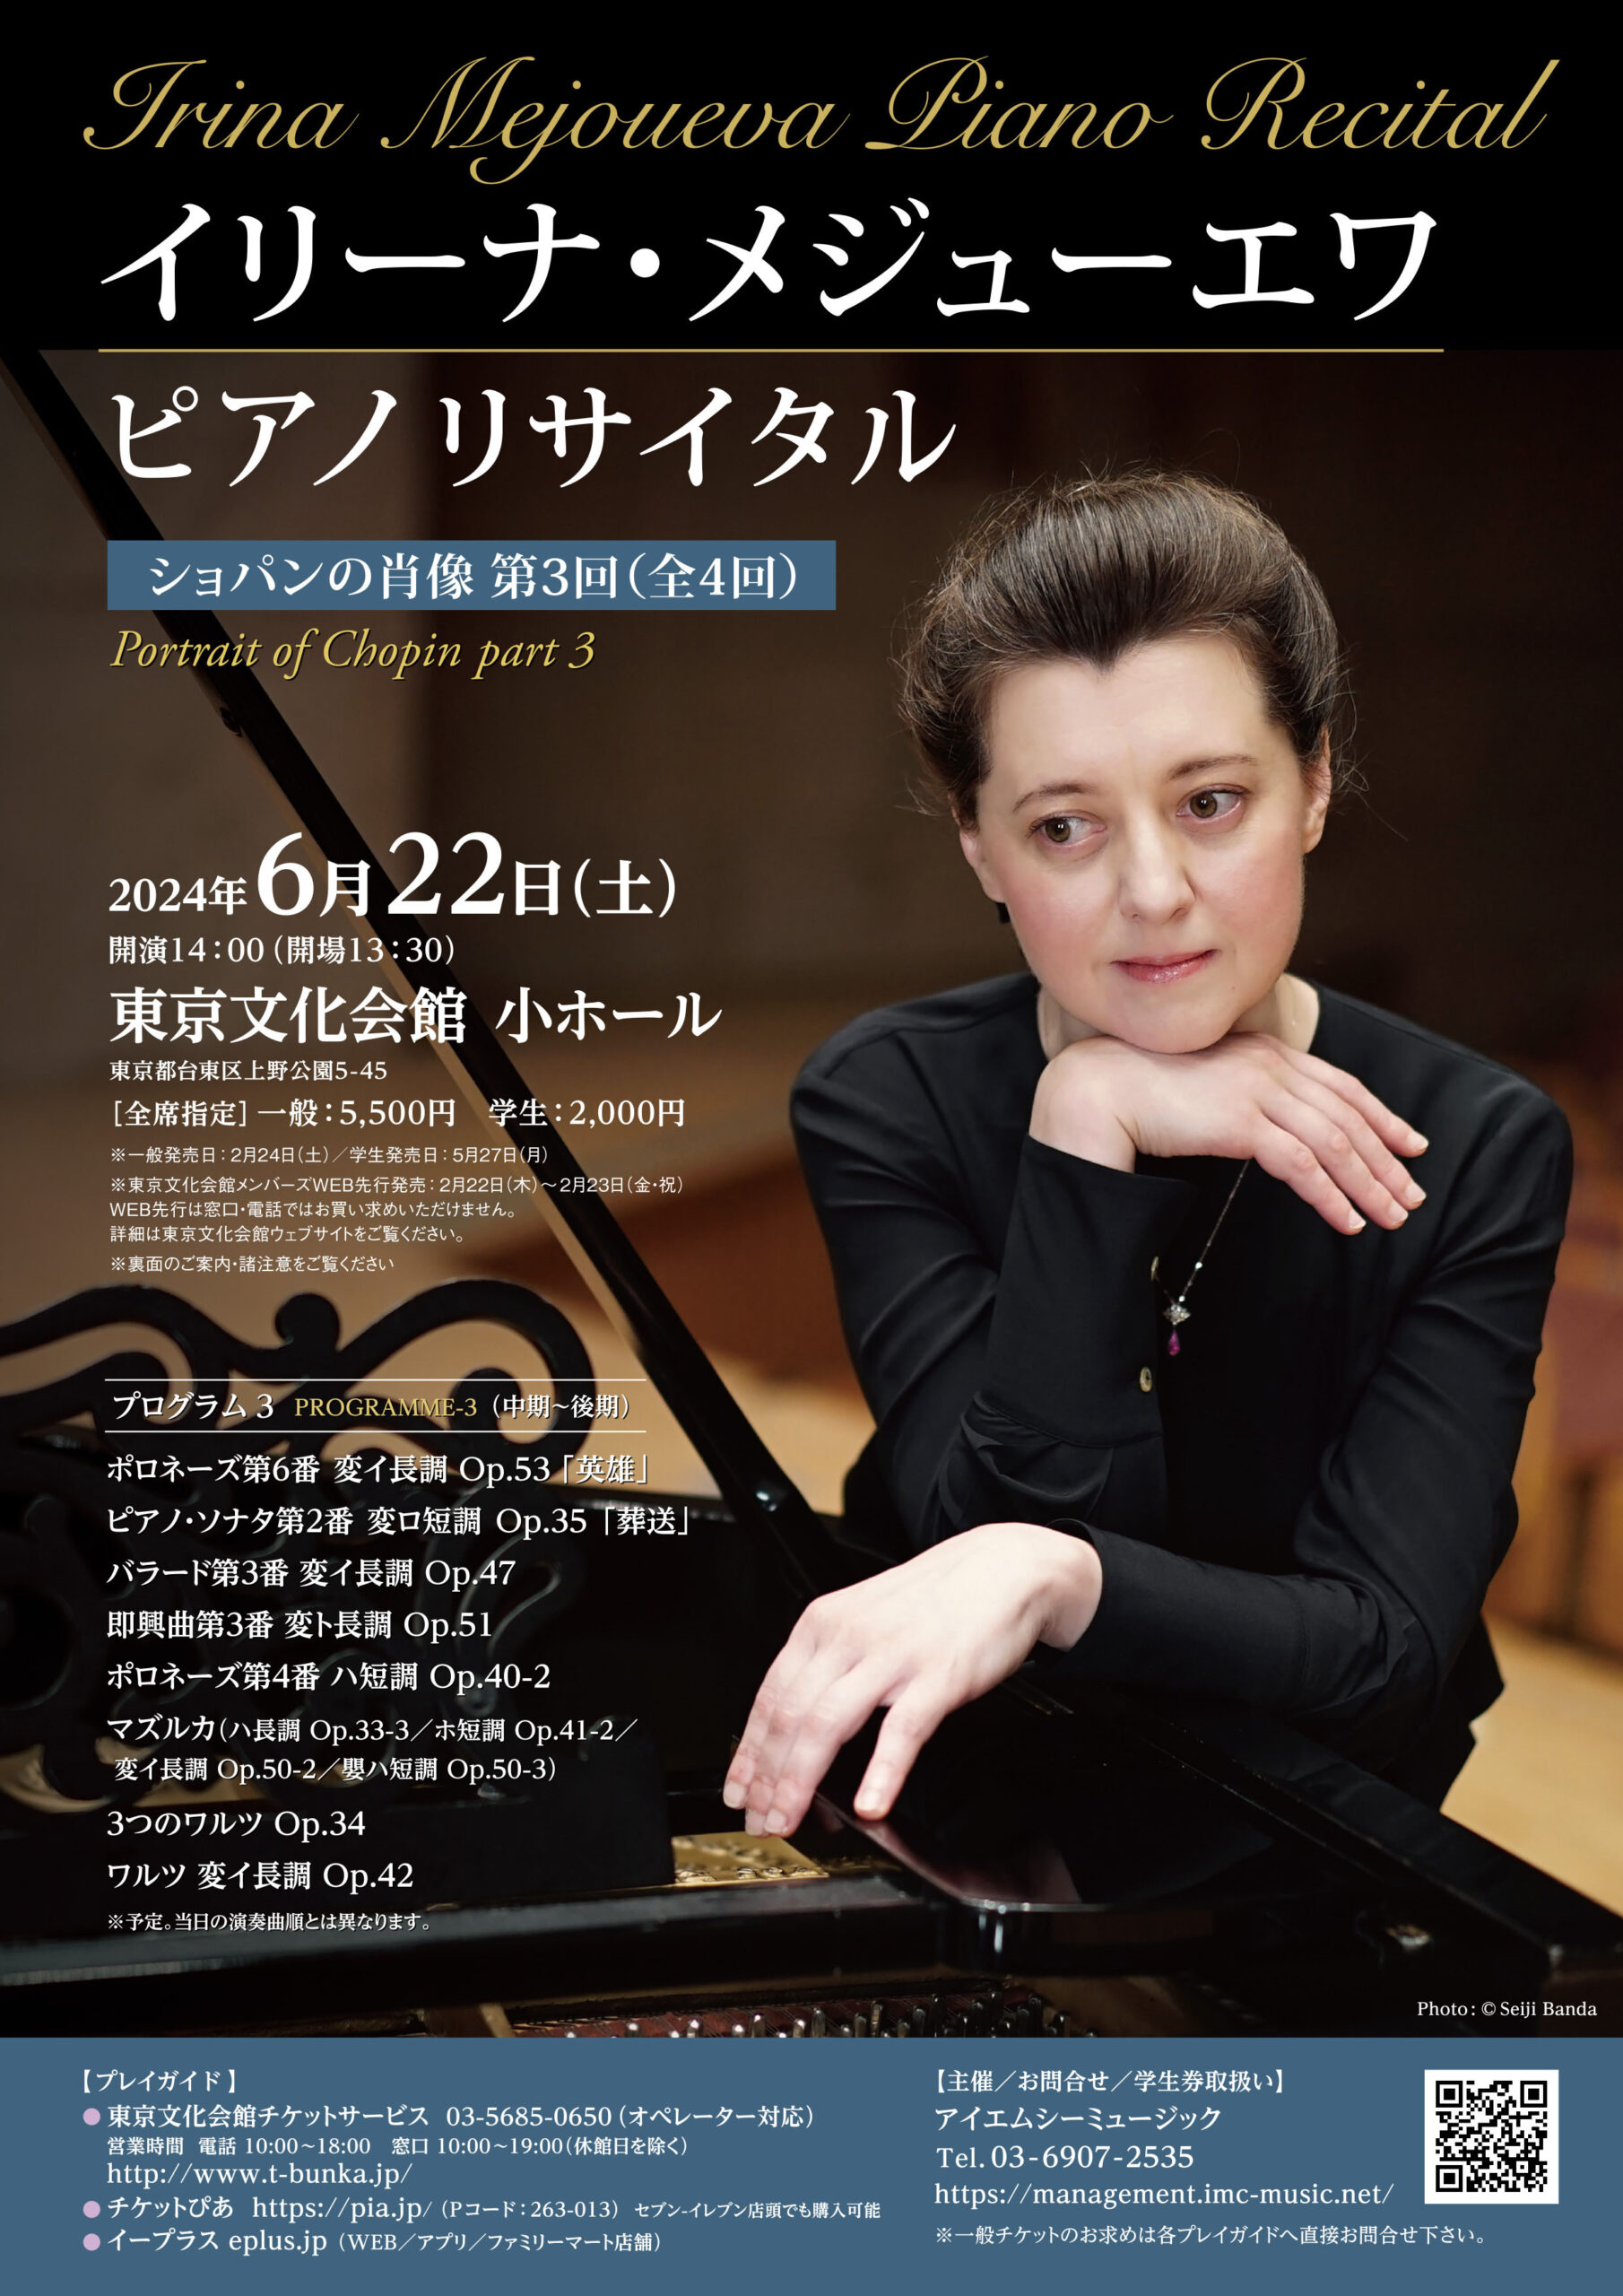 Irina Mejoueva Piano Recital - Portrait of Chopin part 3